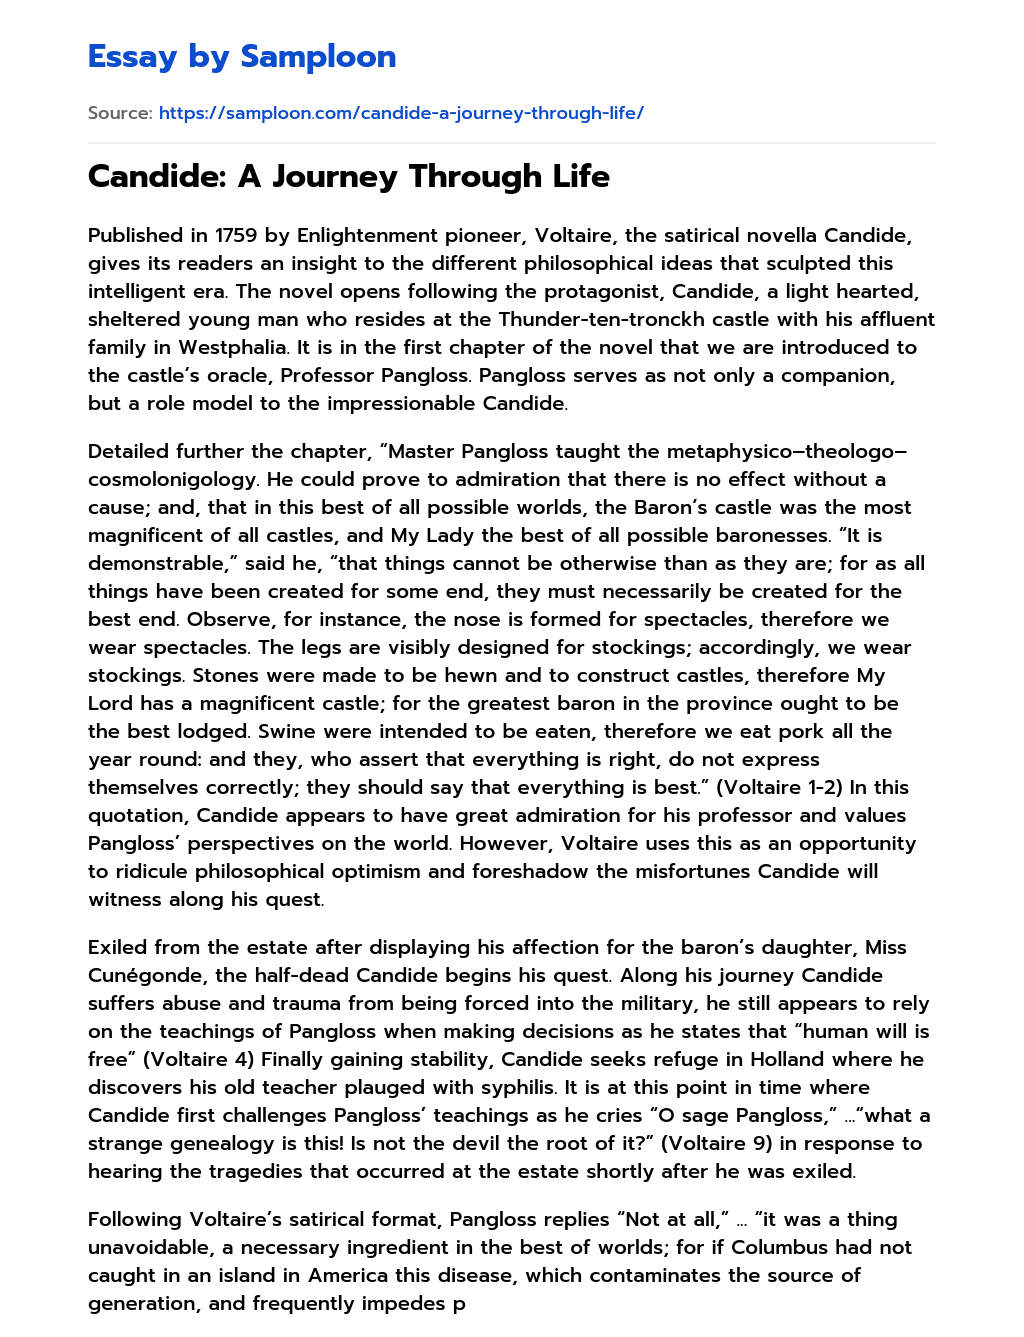 Candide: A Journey Through Life Summary essay